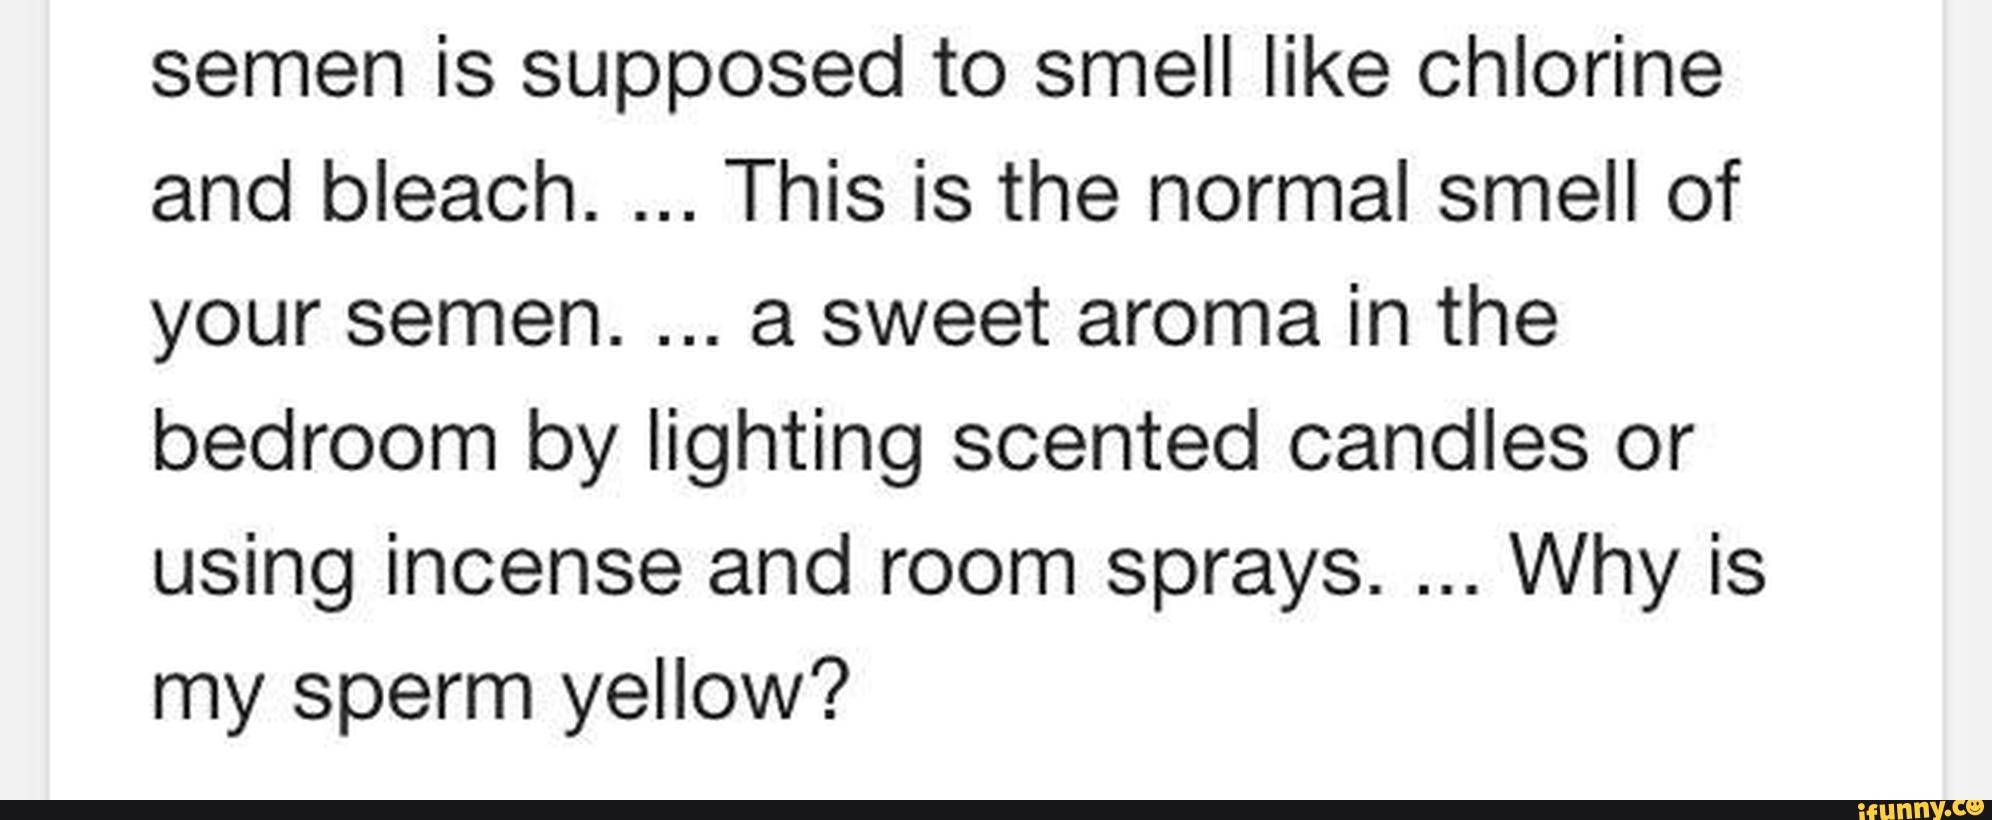 Why semen smells like bleach